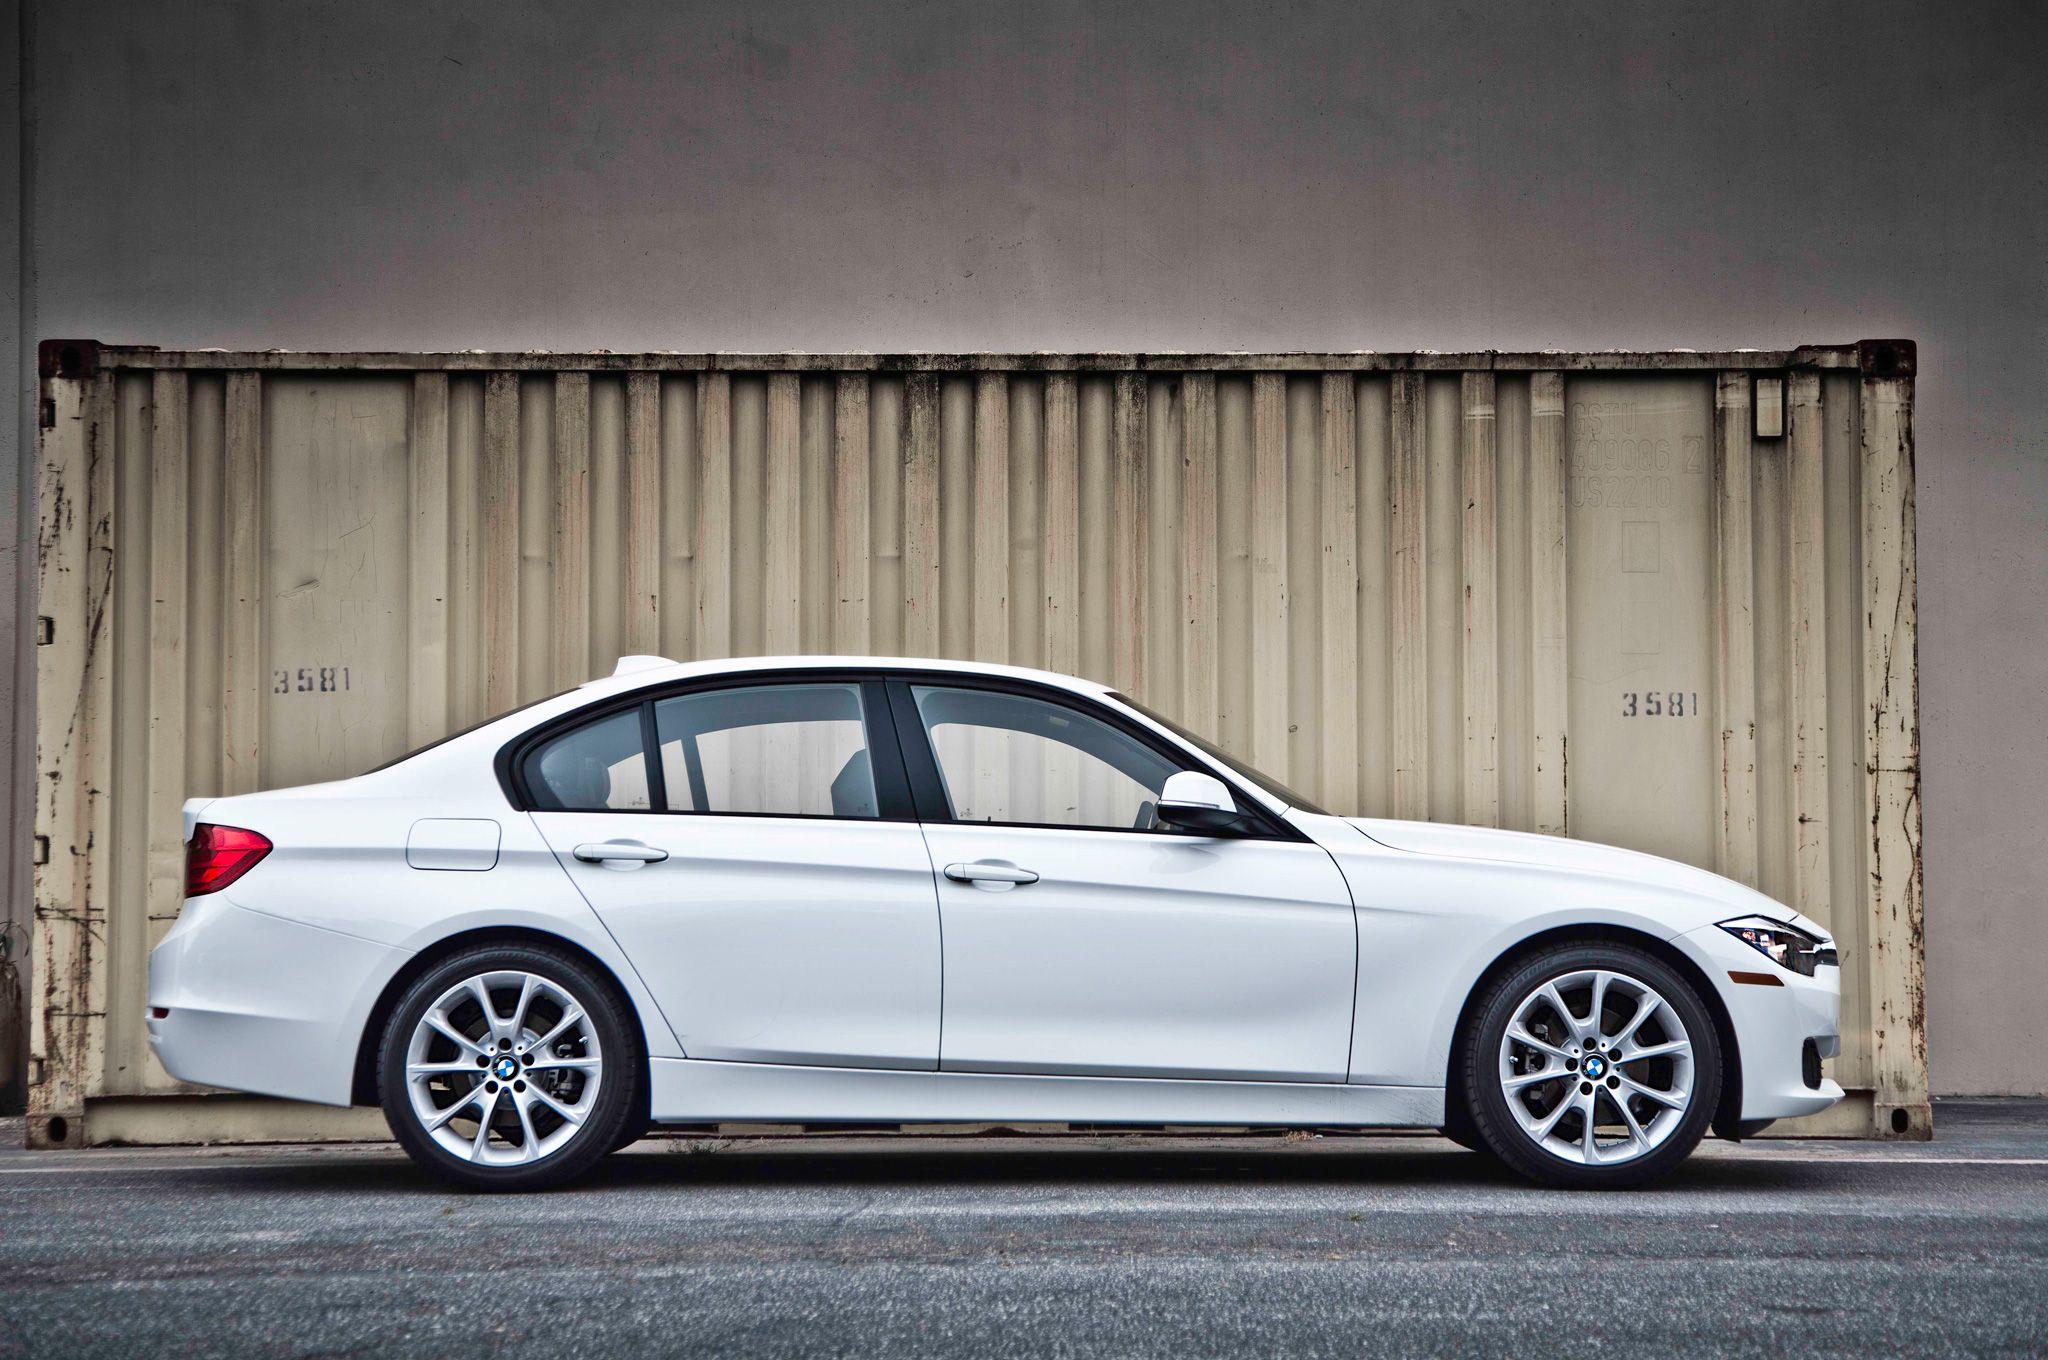 BMW 320i Wallpaper, Best BMW 320i Wallpaper in High Quality, BMW